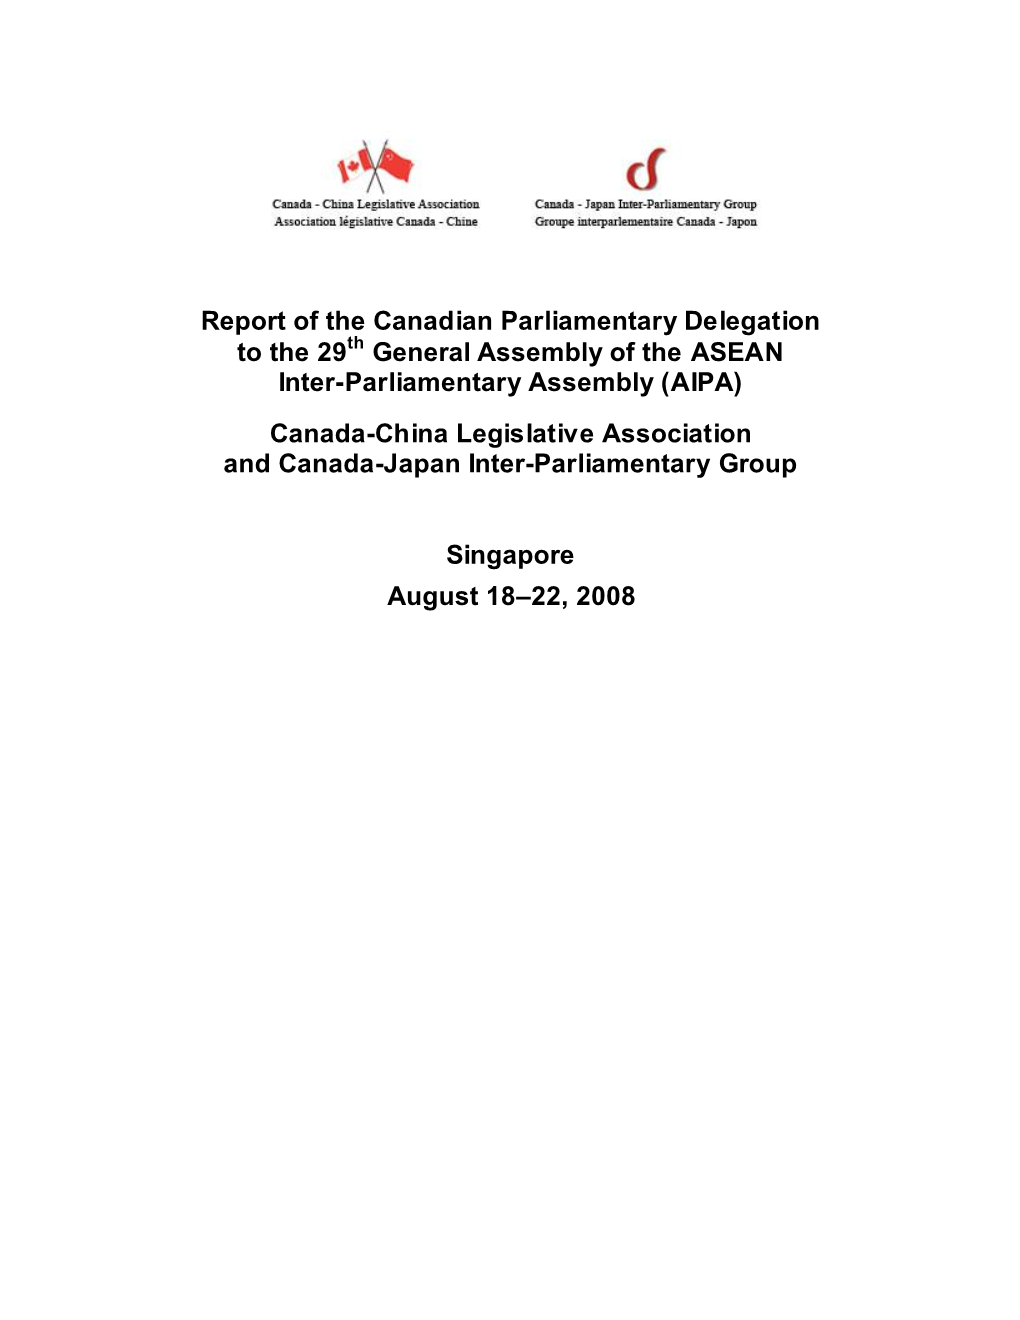 AIPA) Canada-China Legislative Association and Canada-Japan Inter-Parliamentary Group